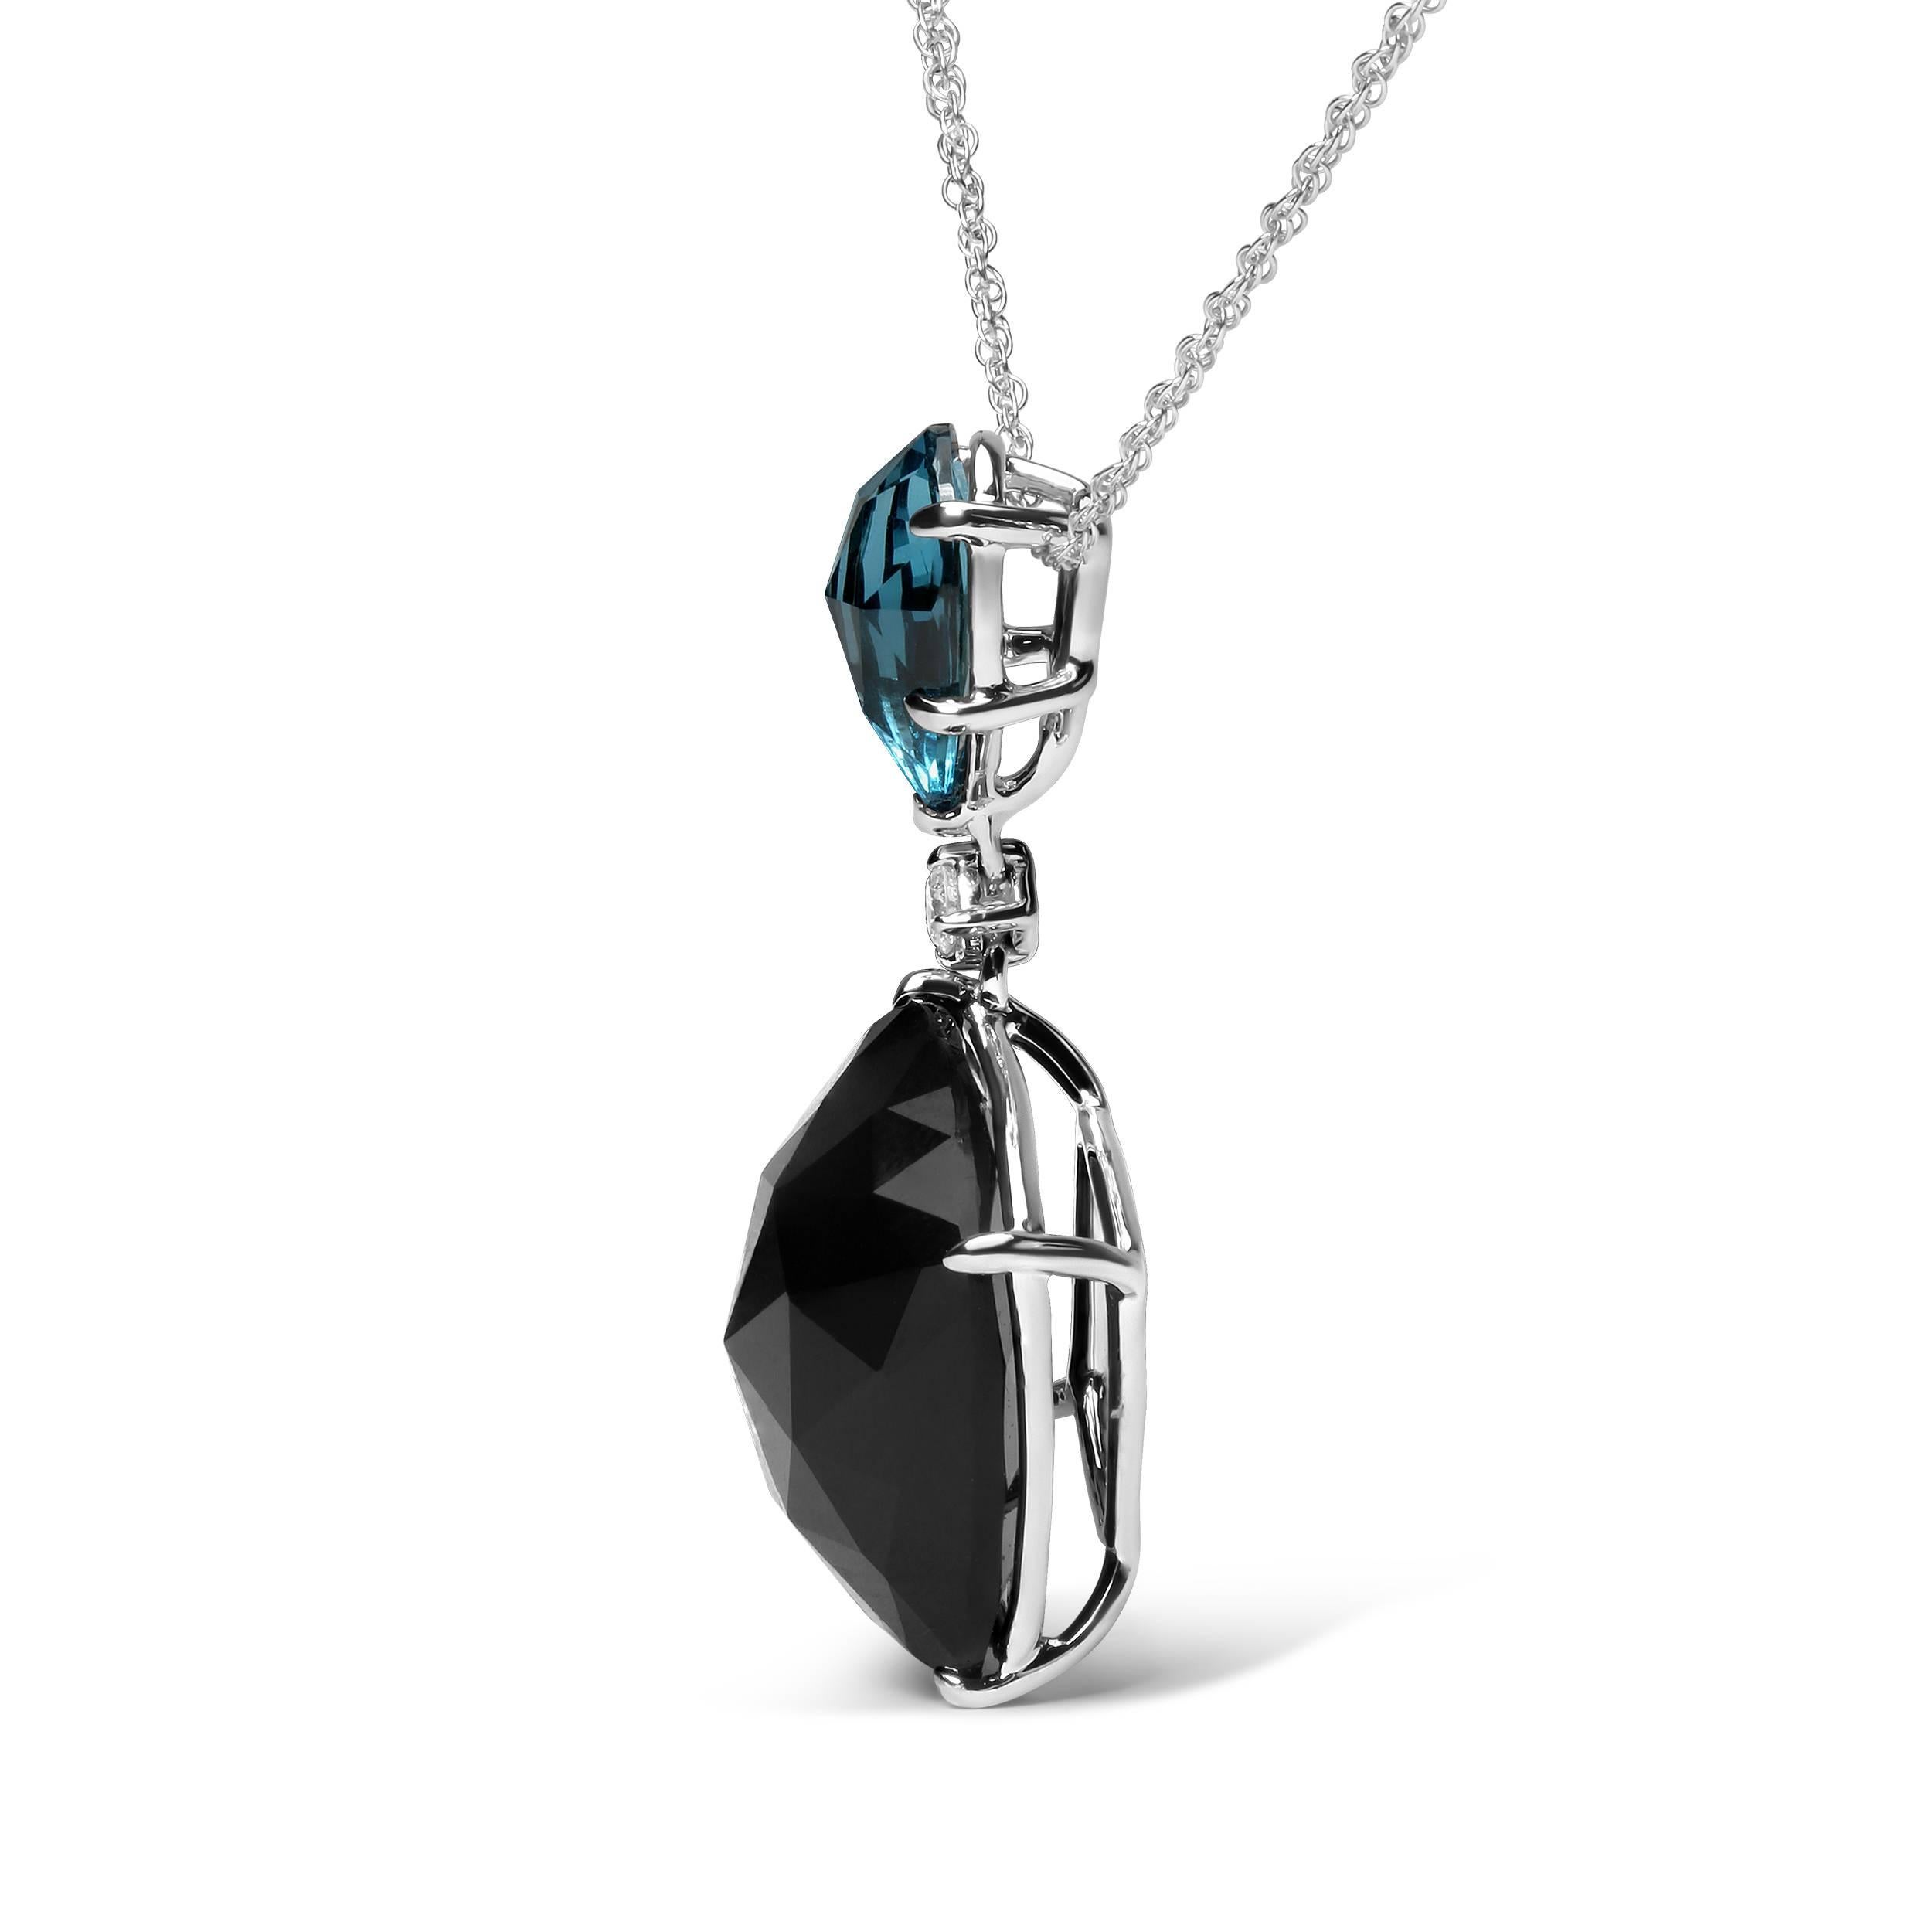 Contemporary 18K White Gold Diamond Accent & London Blue Topaz & Black Onyx Pendant Necklace